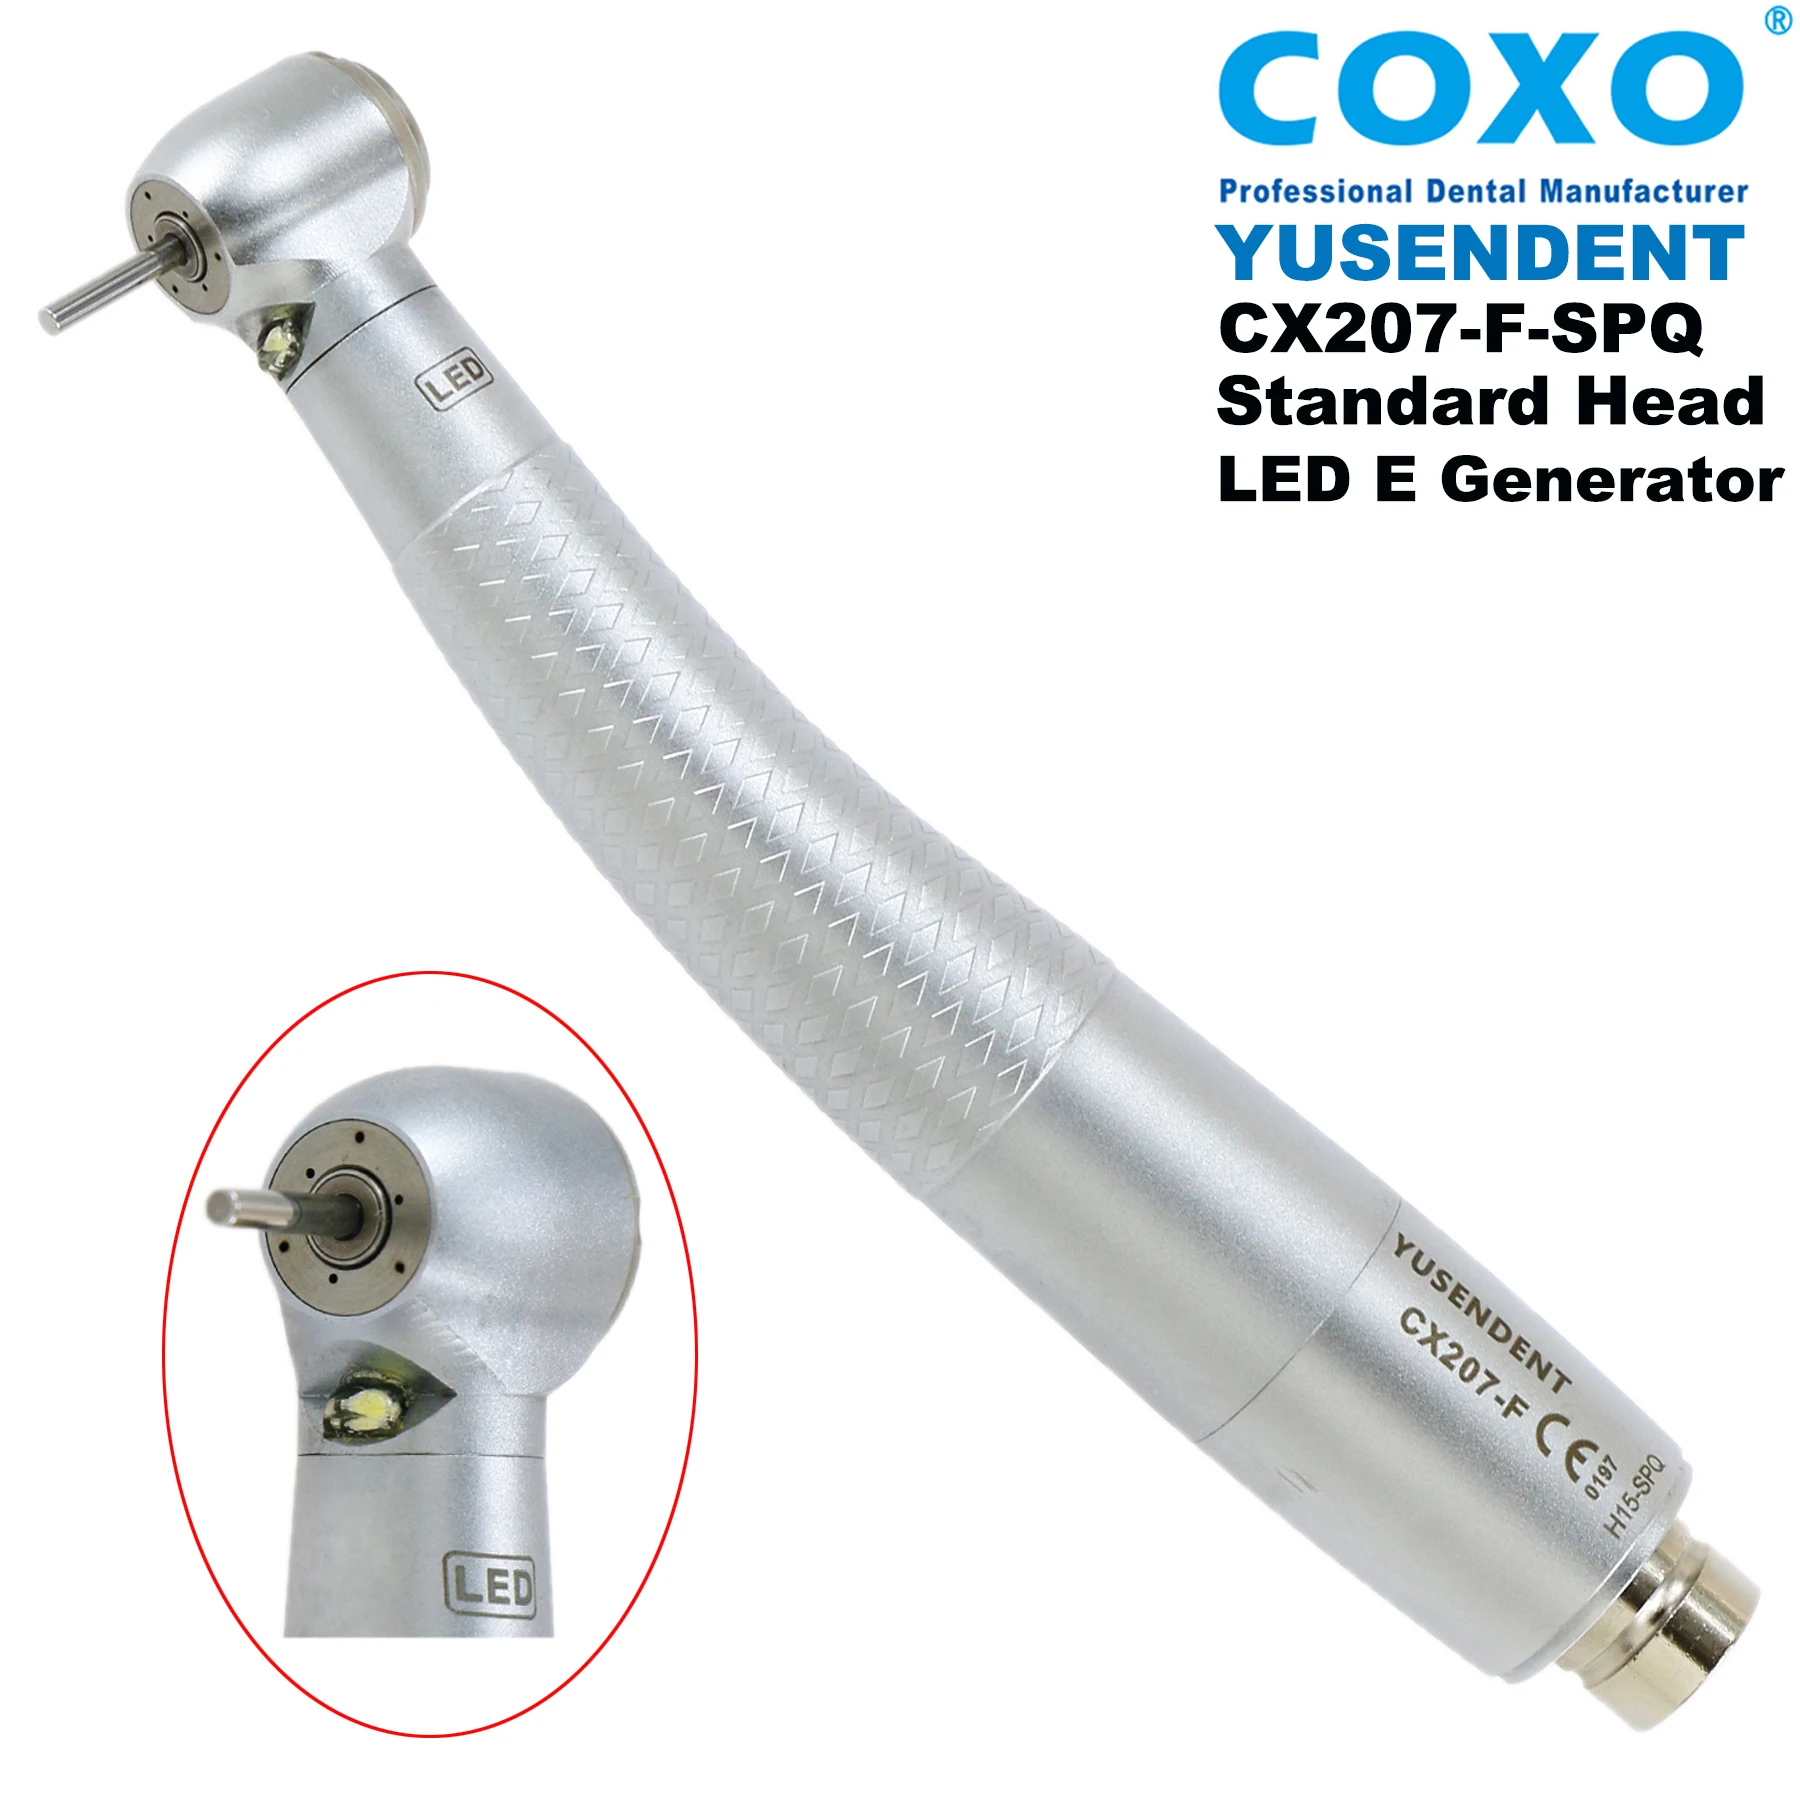 

COXO Dental Self-Power LED High Speed Turbine Standard Head Handpiece Fit NSK CX207-F-SPQ